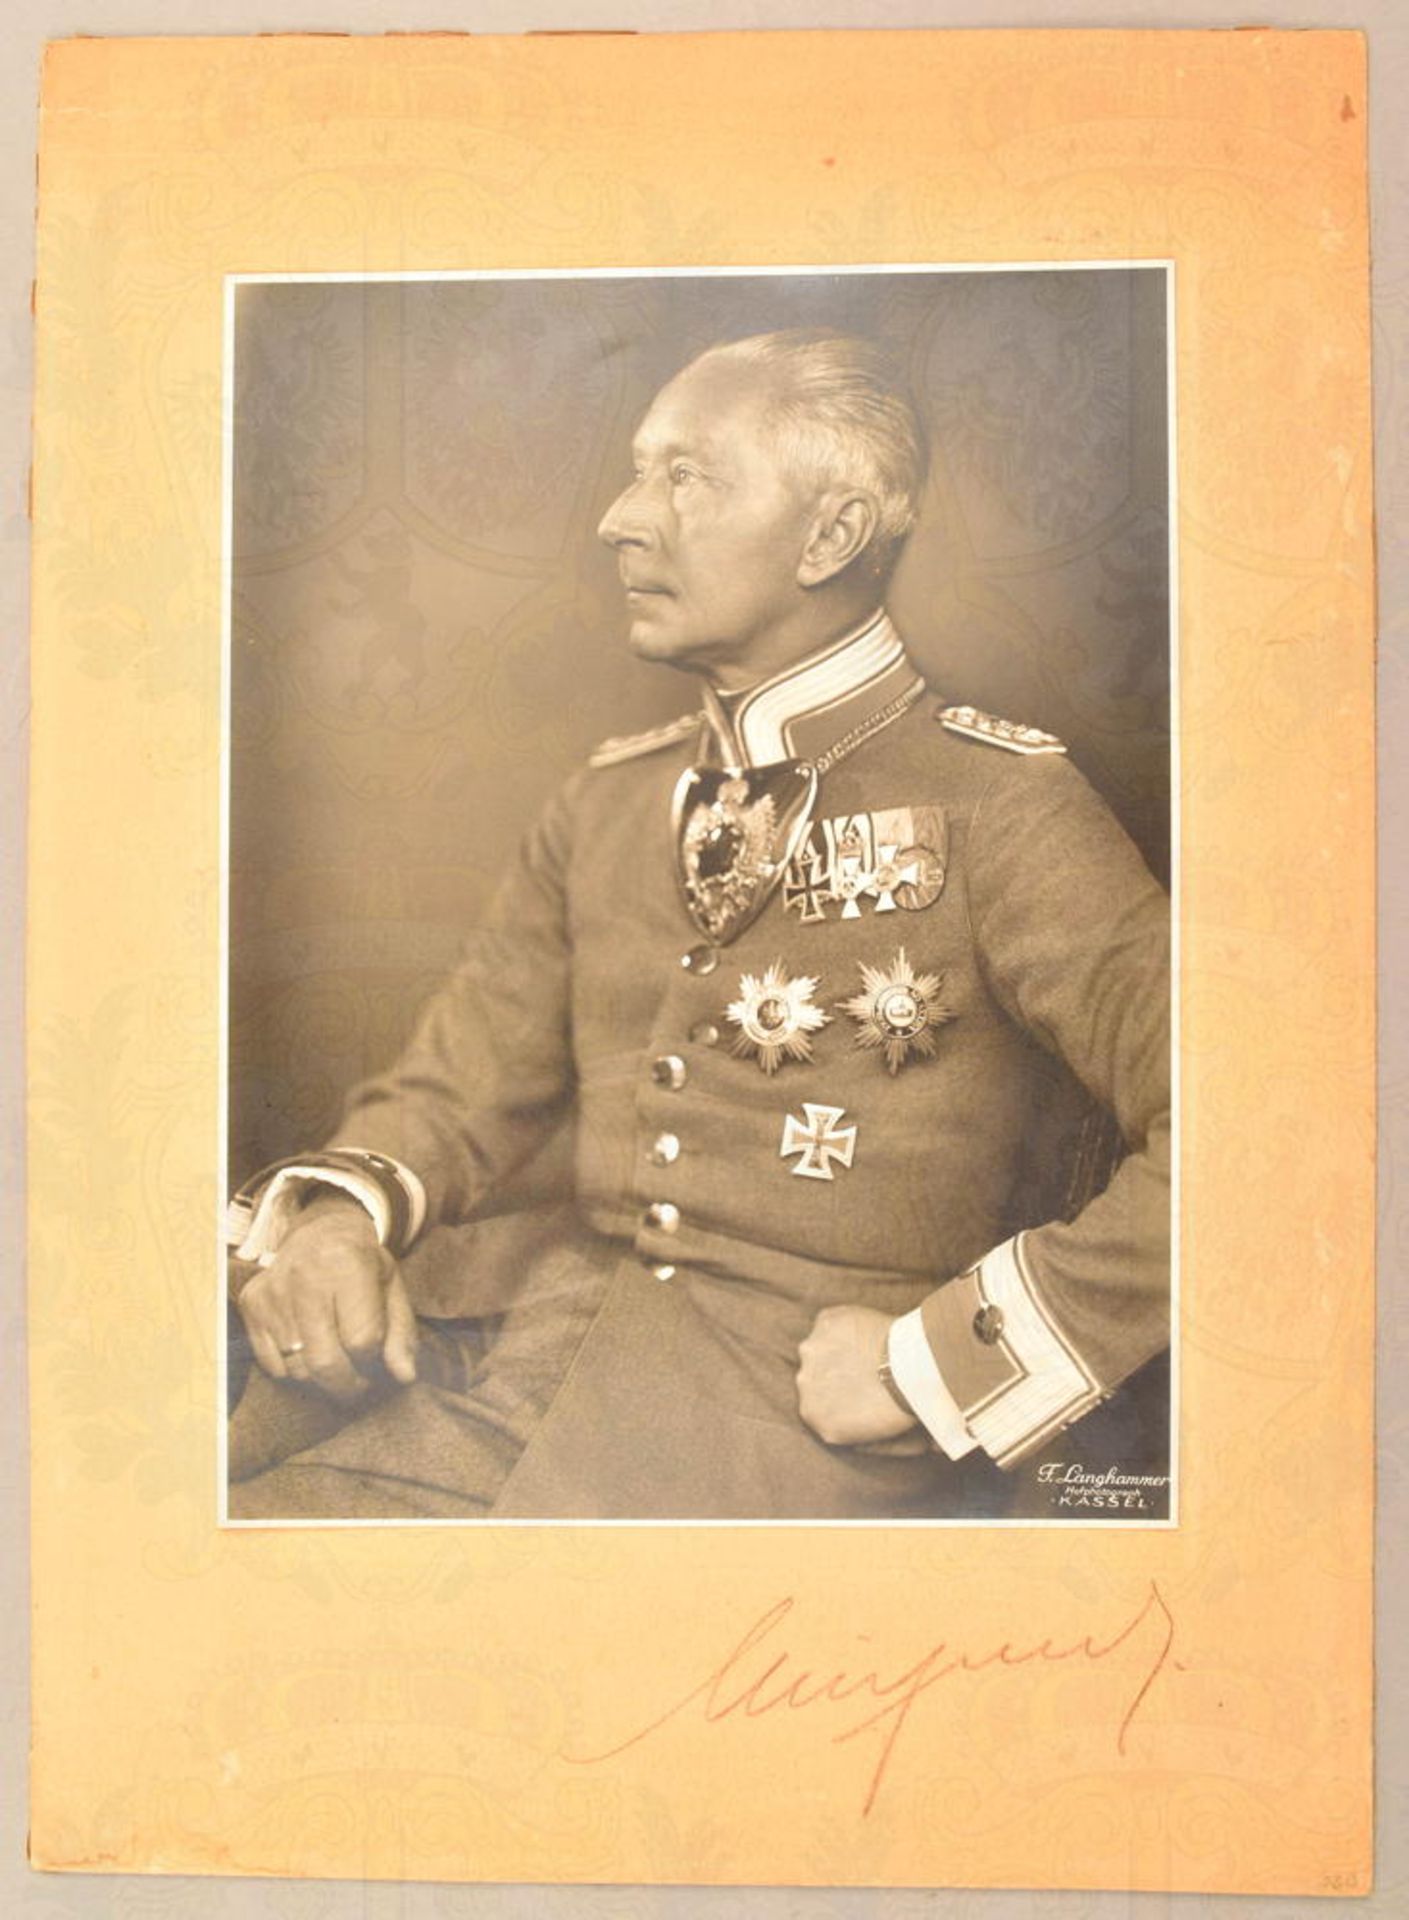 Portrait photograph crown prince Wilhelm with signature